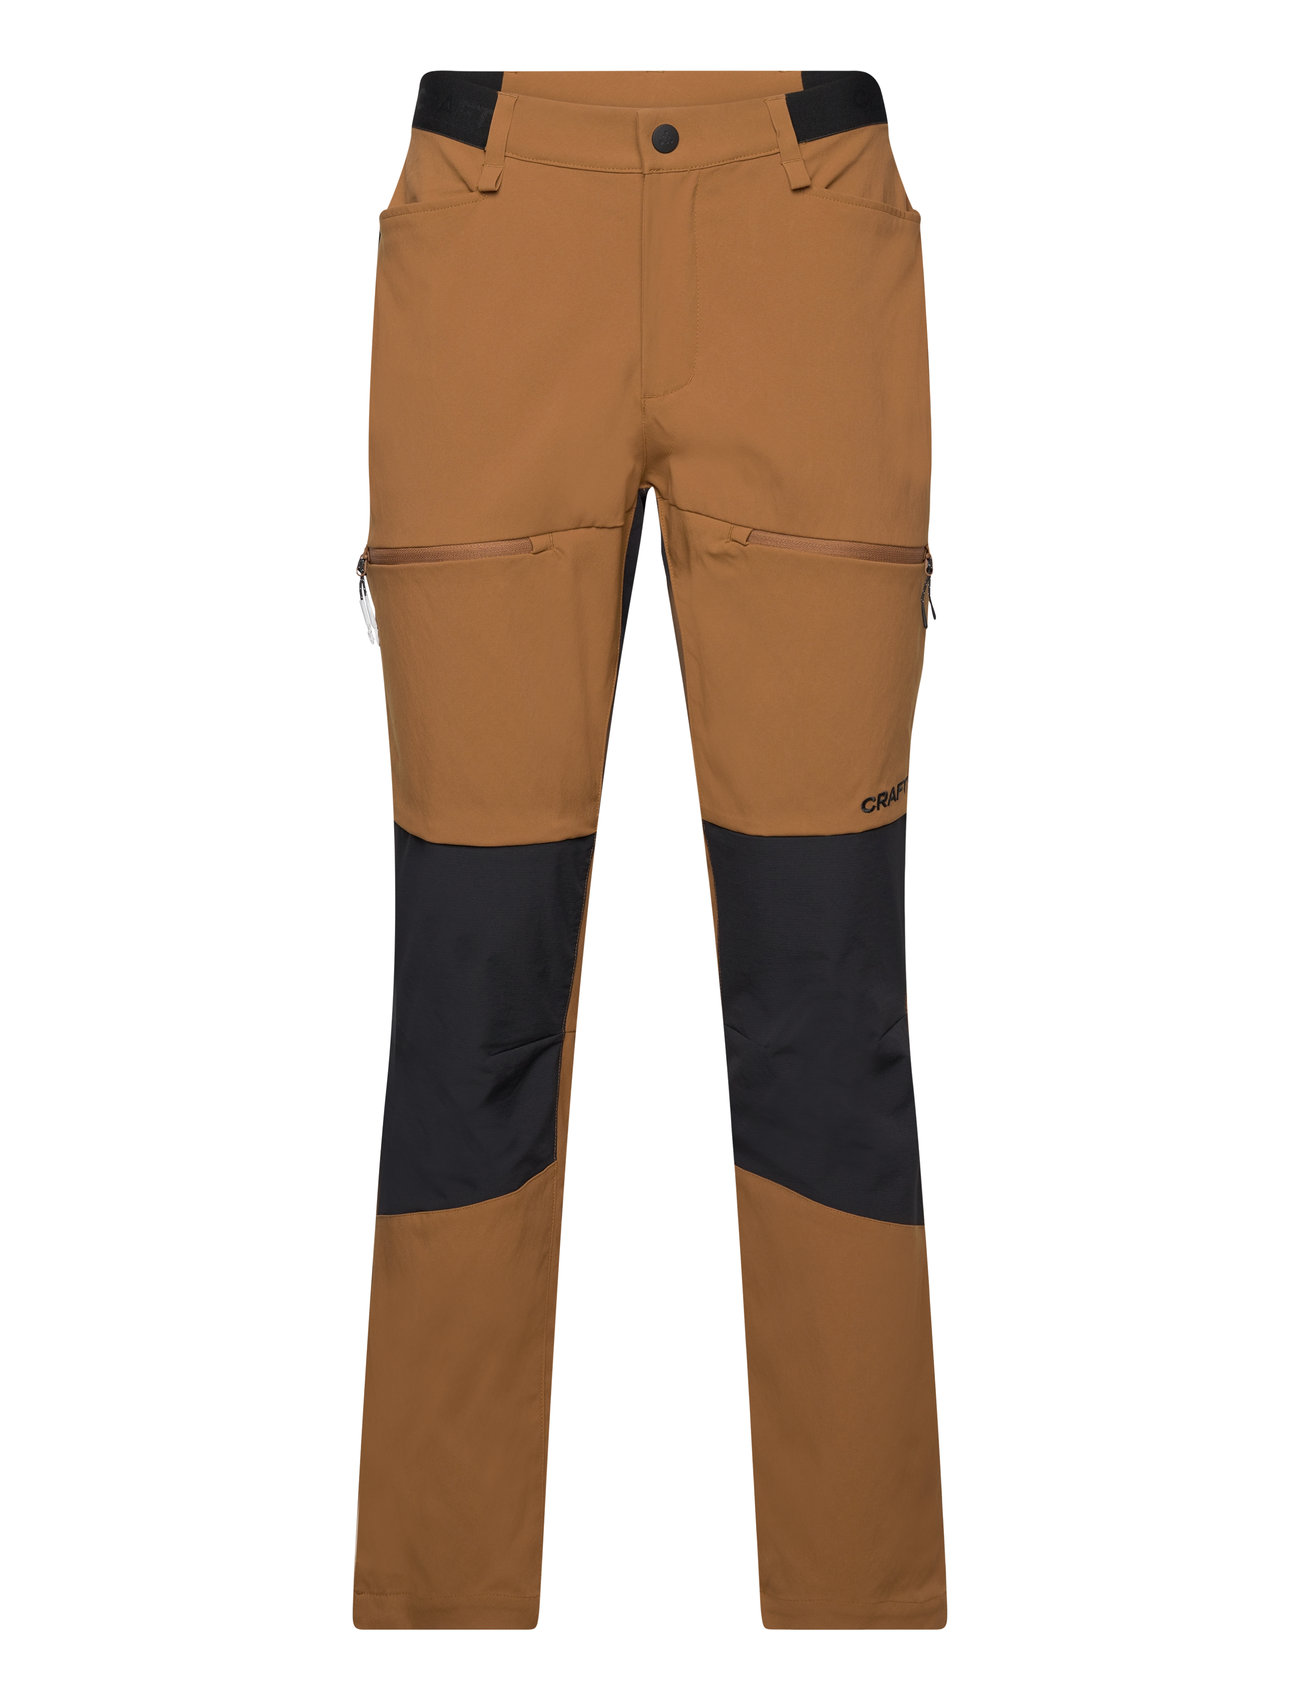 Mammut Zinal Guide Pants - Walking trousers Men's, Buy online